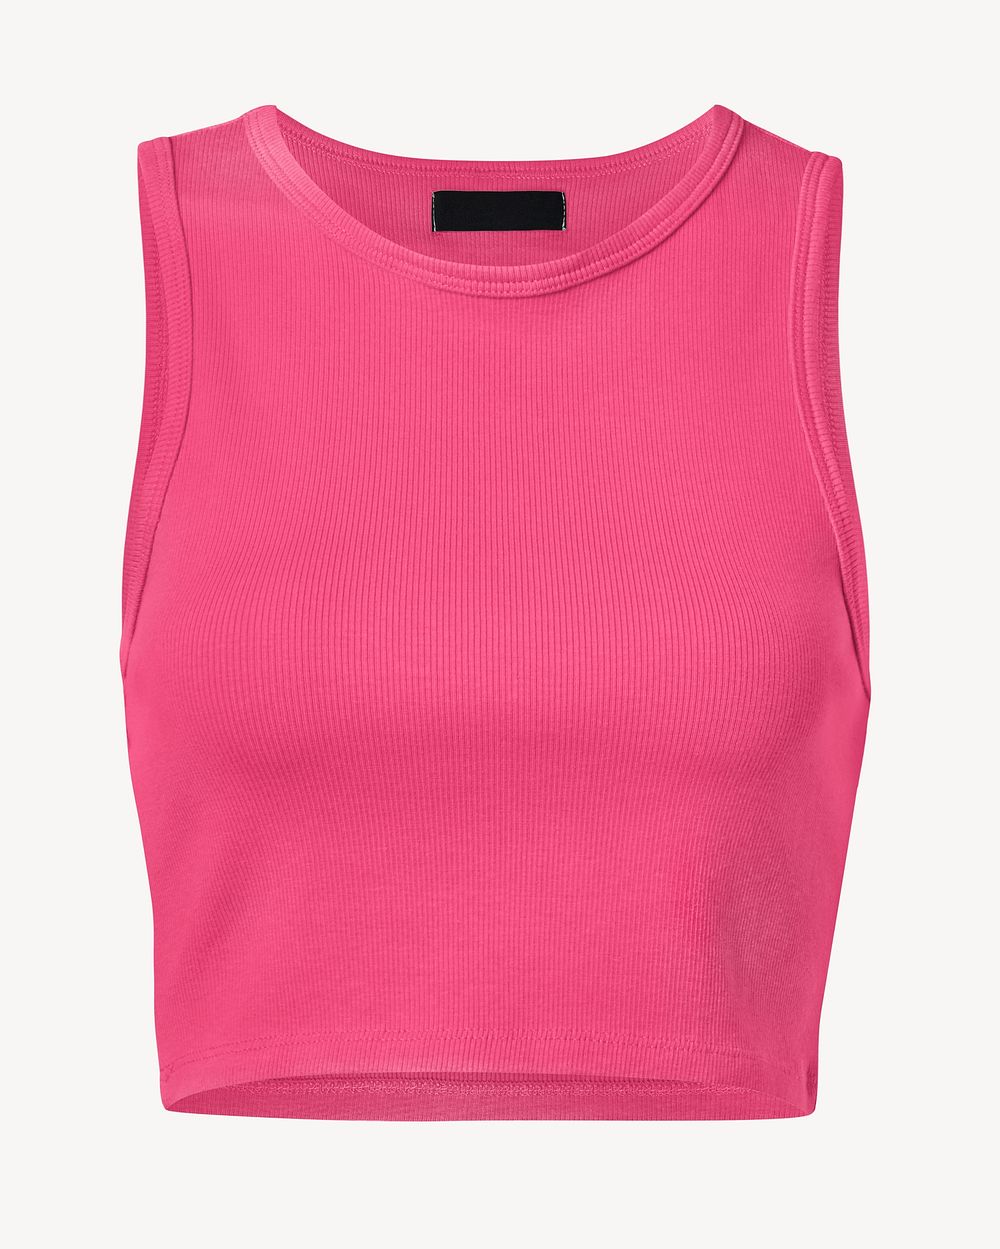 Pink crop tank top mockup, editable apparel & fashion psd